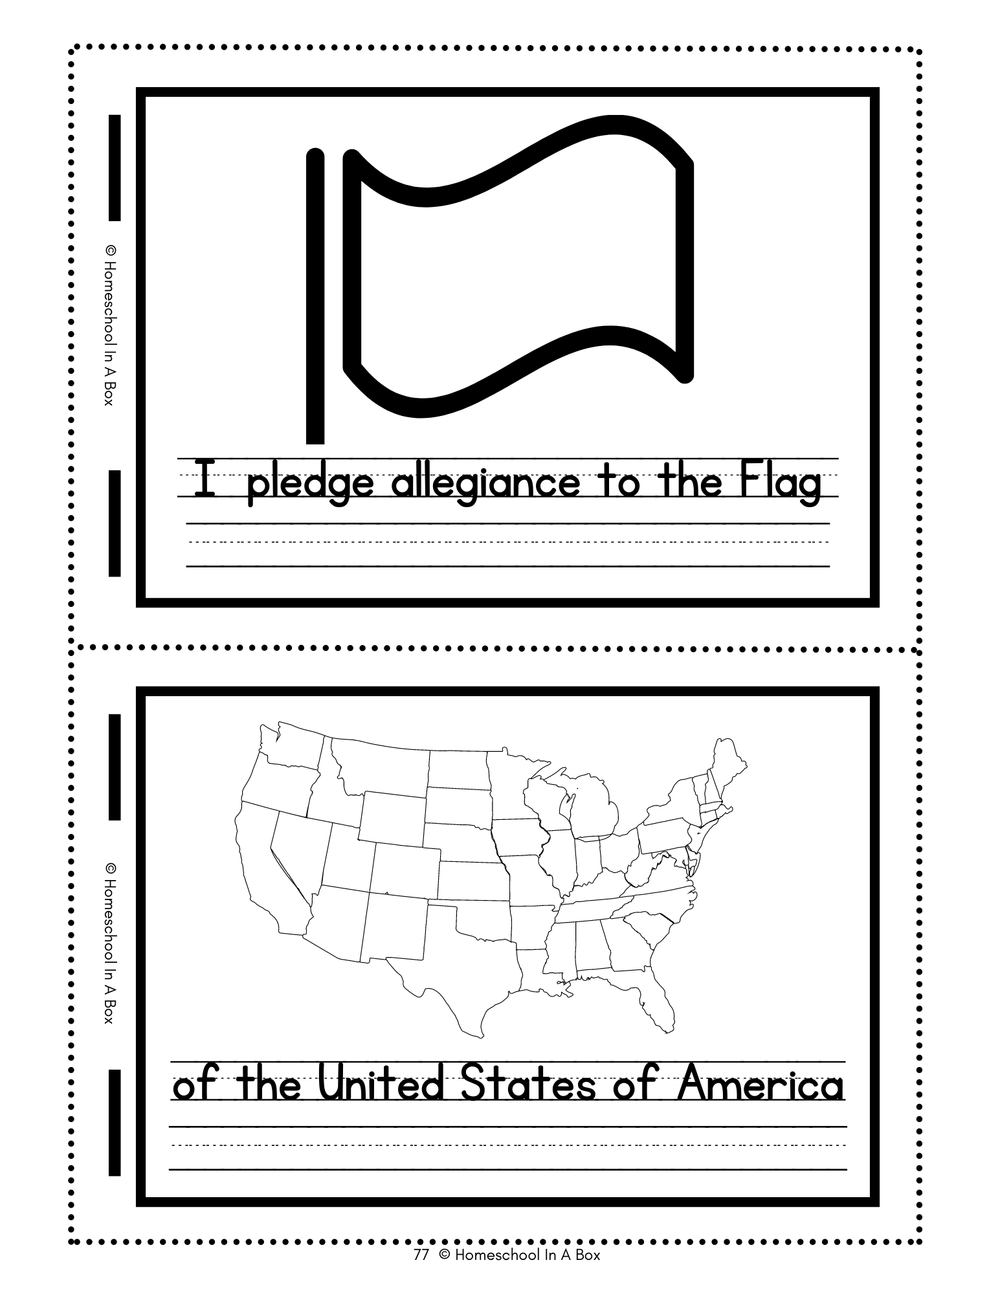 American symbols unit study digital download â homeschool in a box